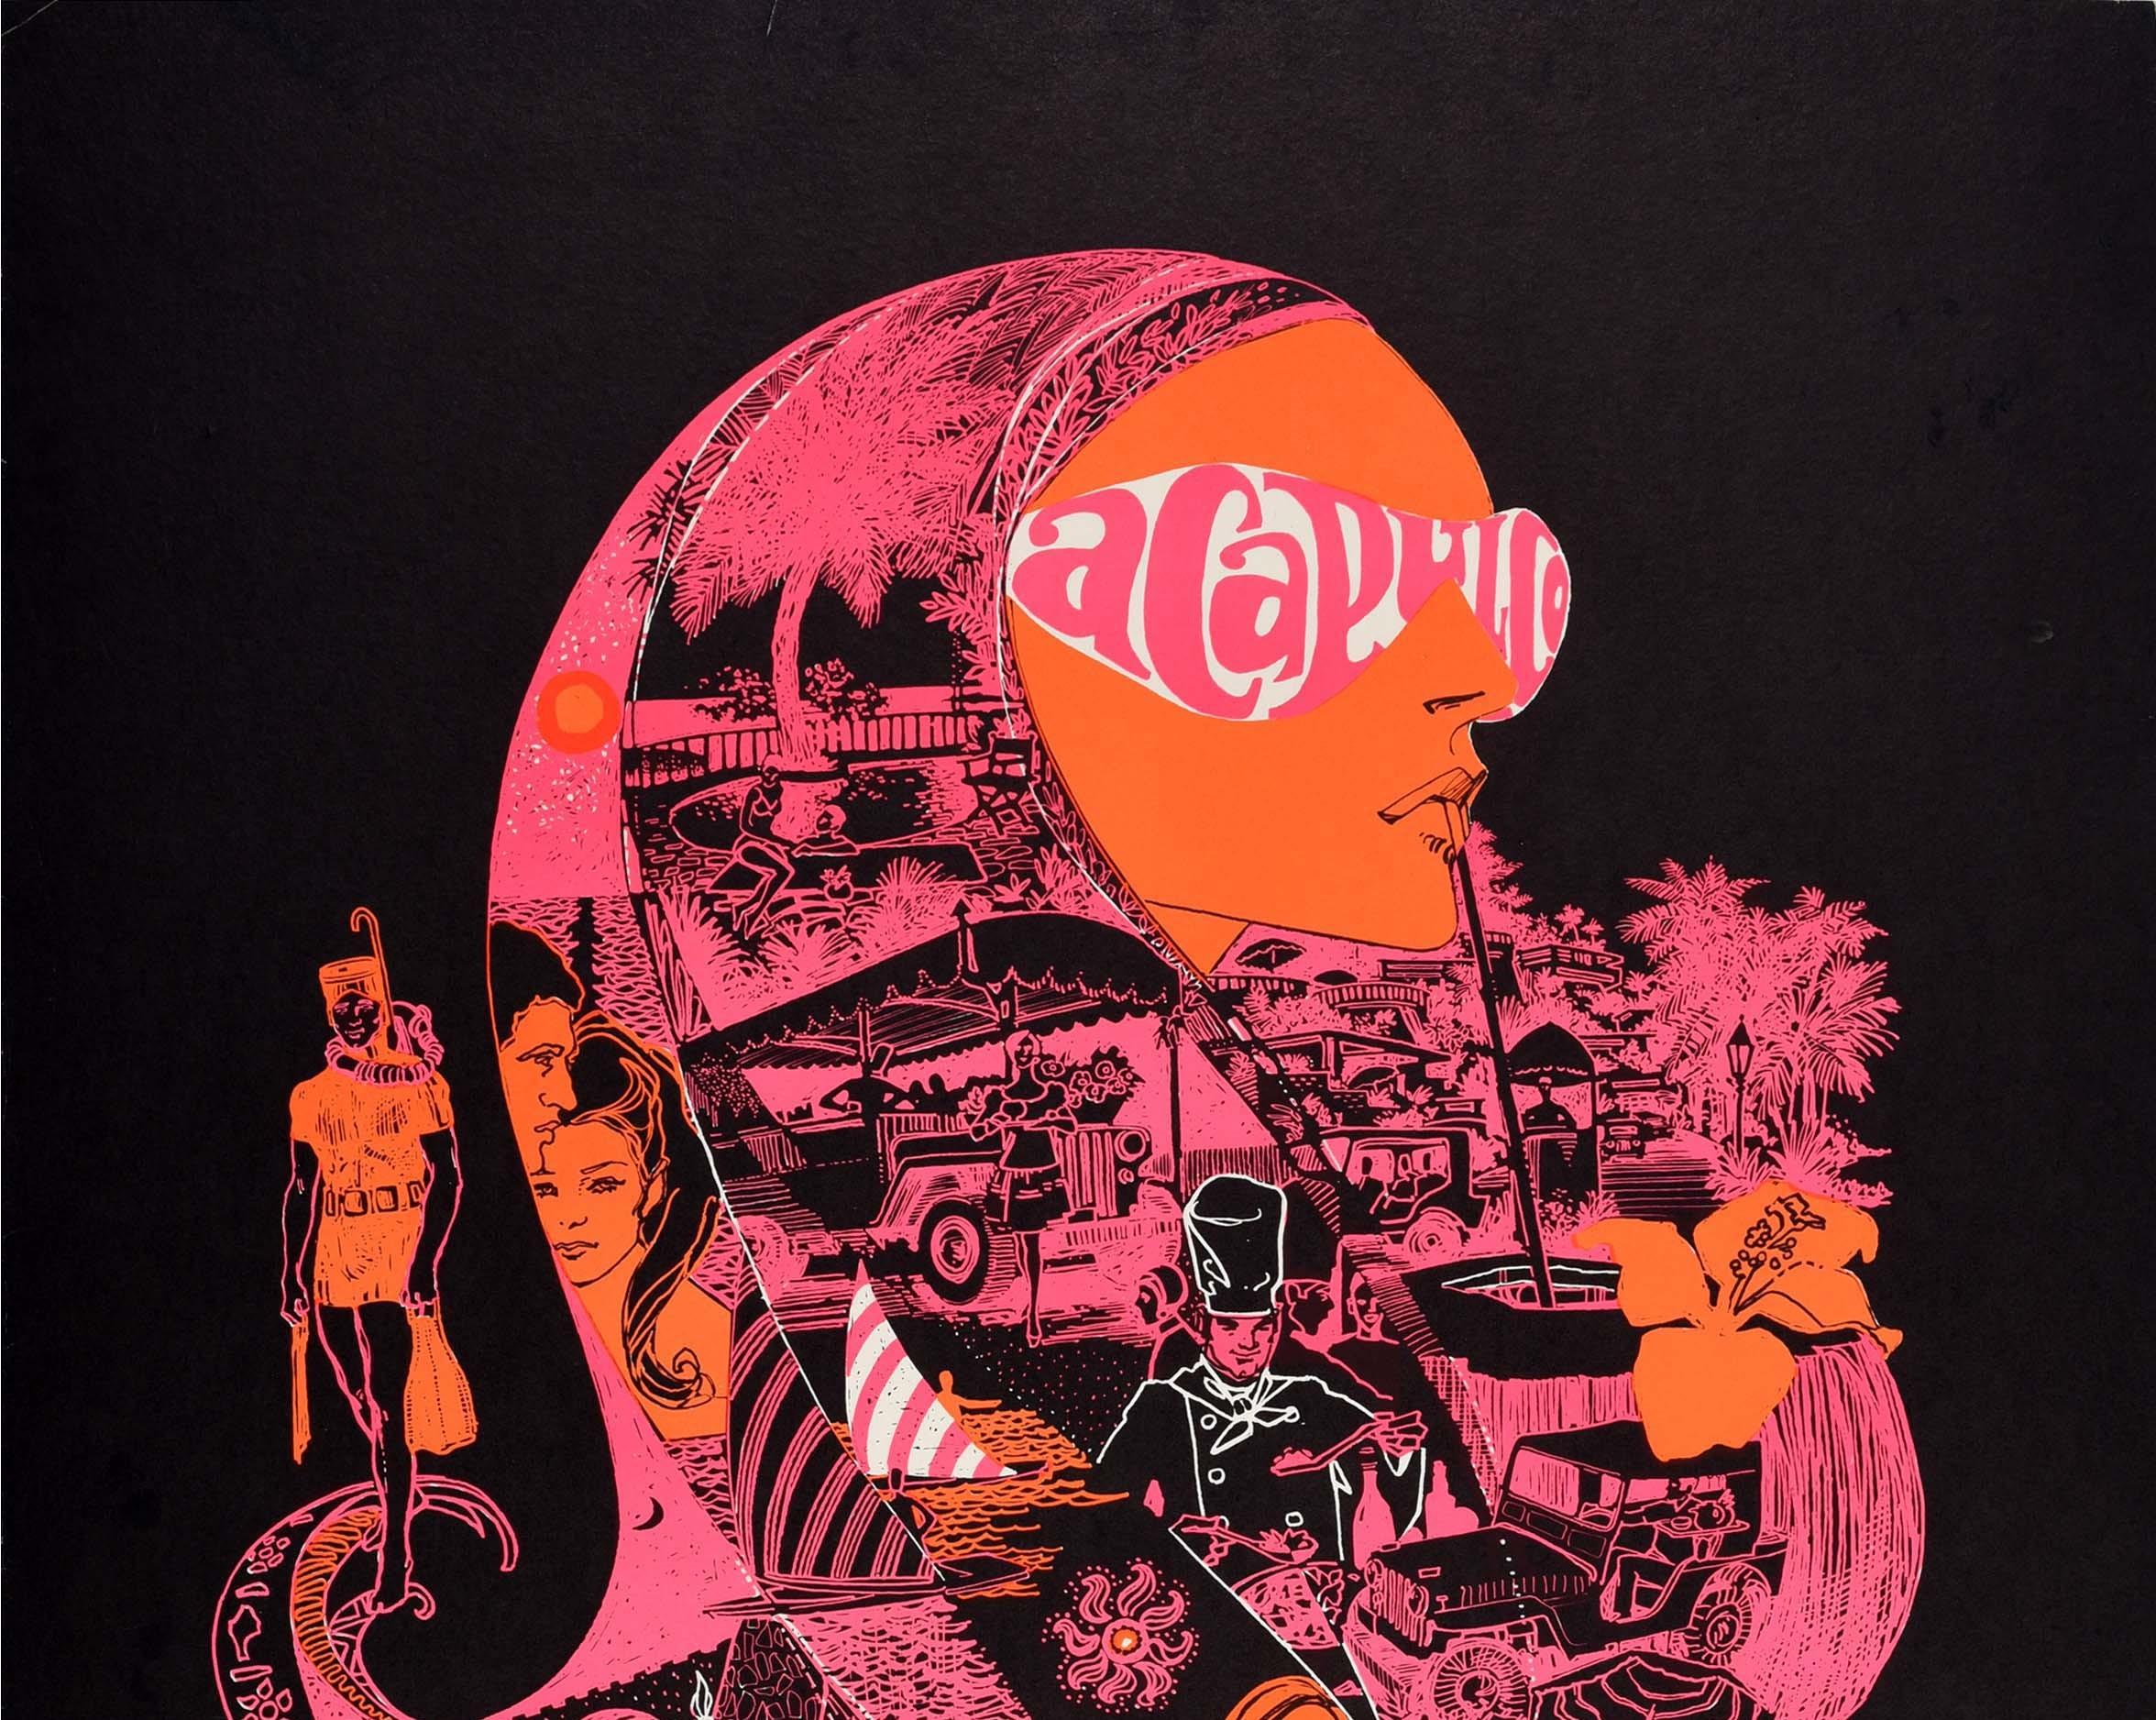 acapulco 1970s